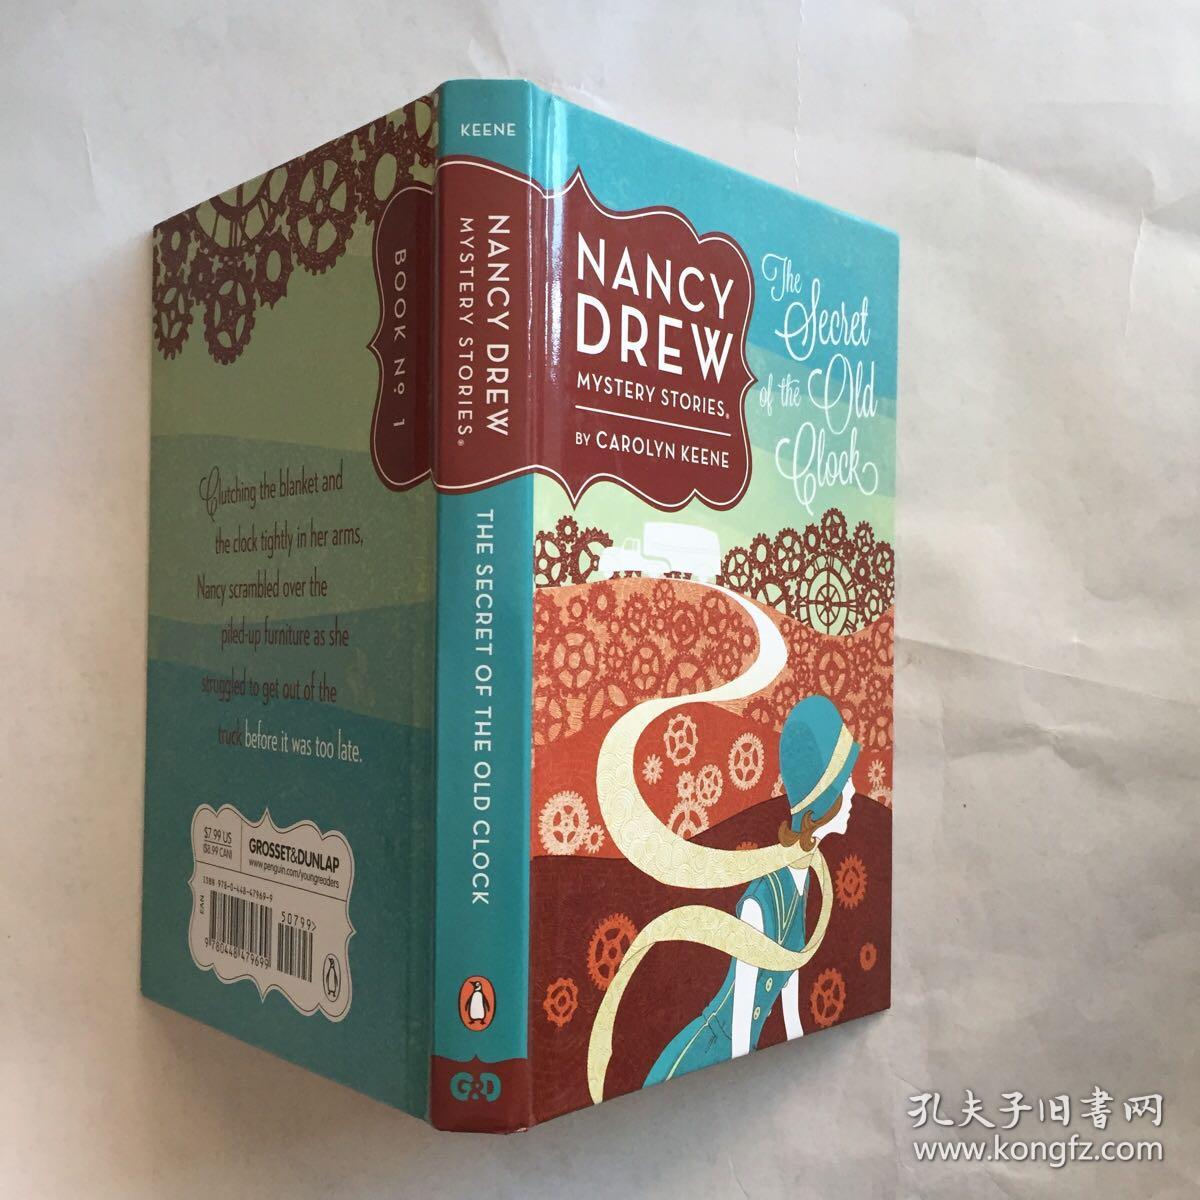 Nancy Drew  The Secret of the Old Clock 南茜·朱尔  精装  插图  2014